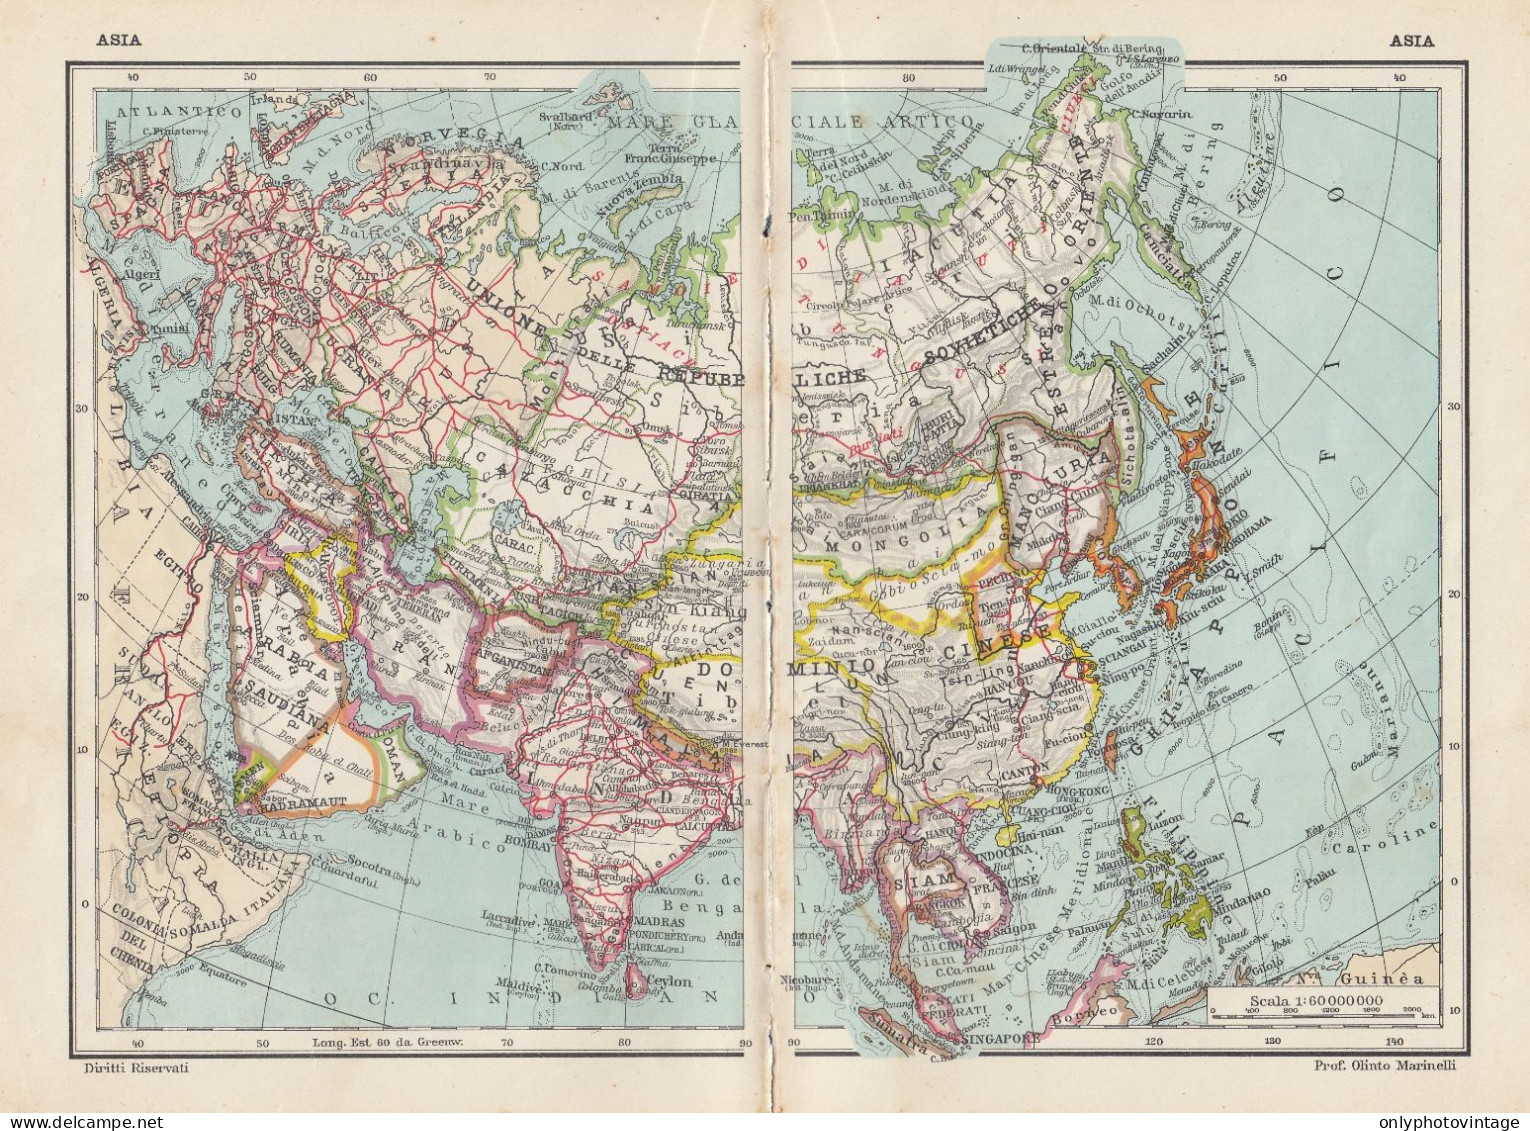 Asia - Carta Geografica D'epoca - 1936 Vintage Map - Mapas Geográficas